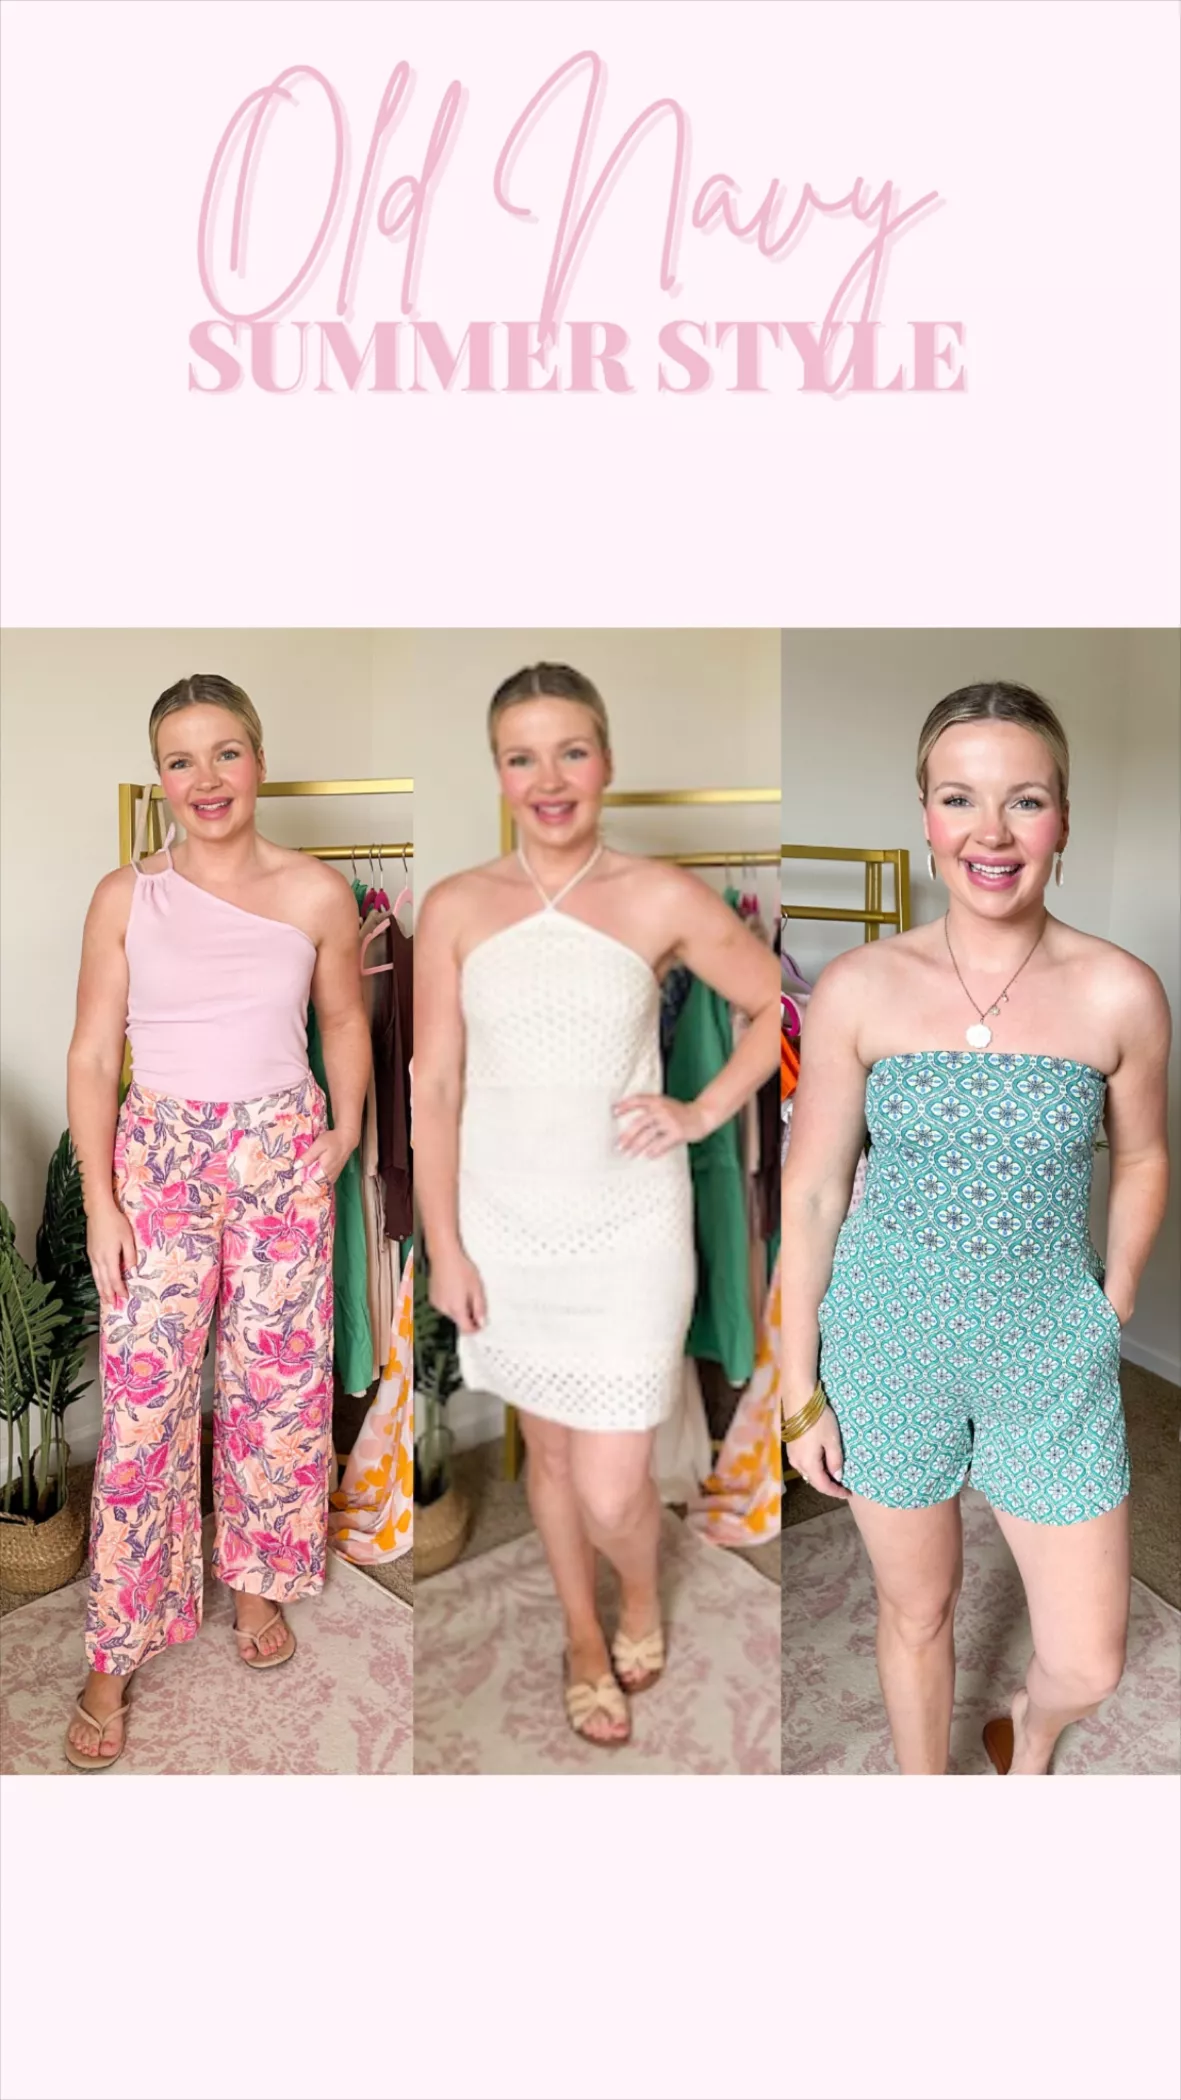 girls crochet-style shorts, girls bottoms